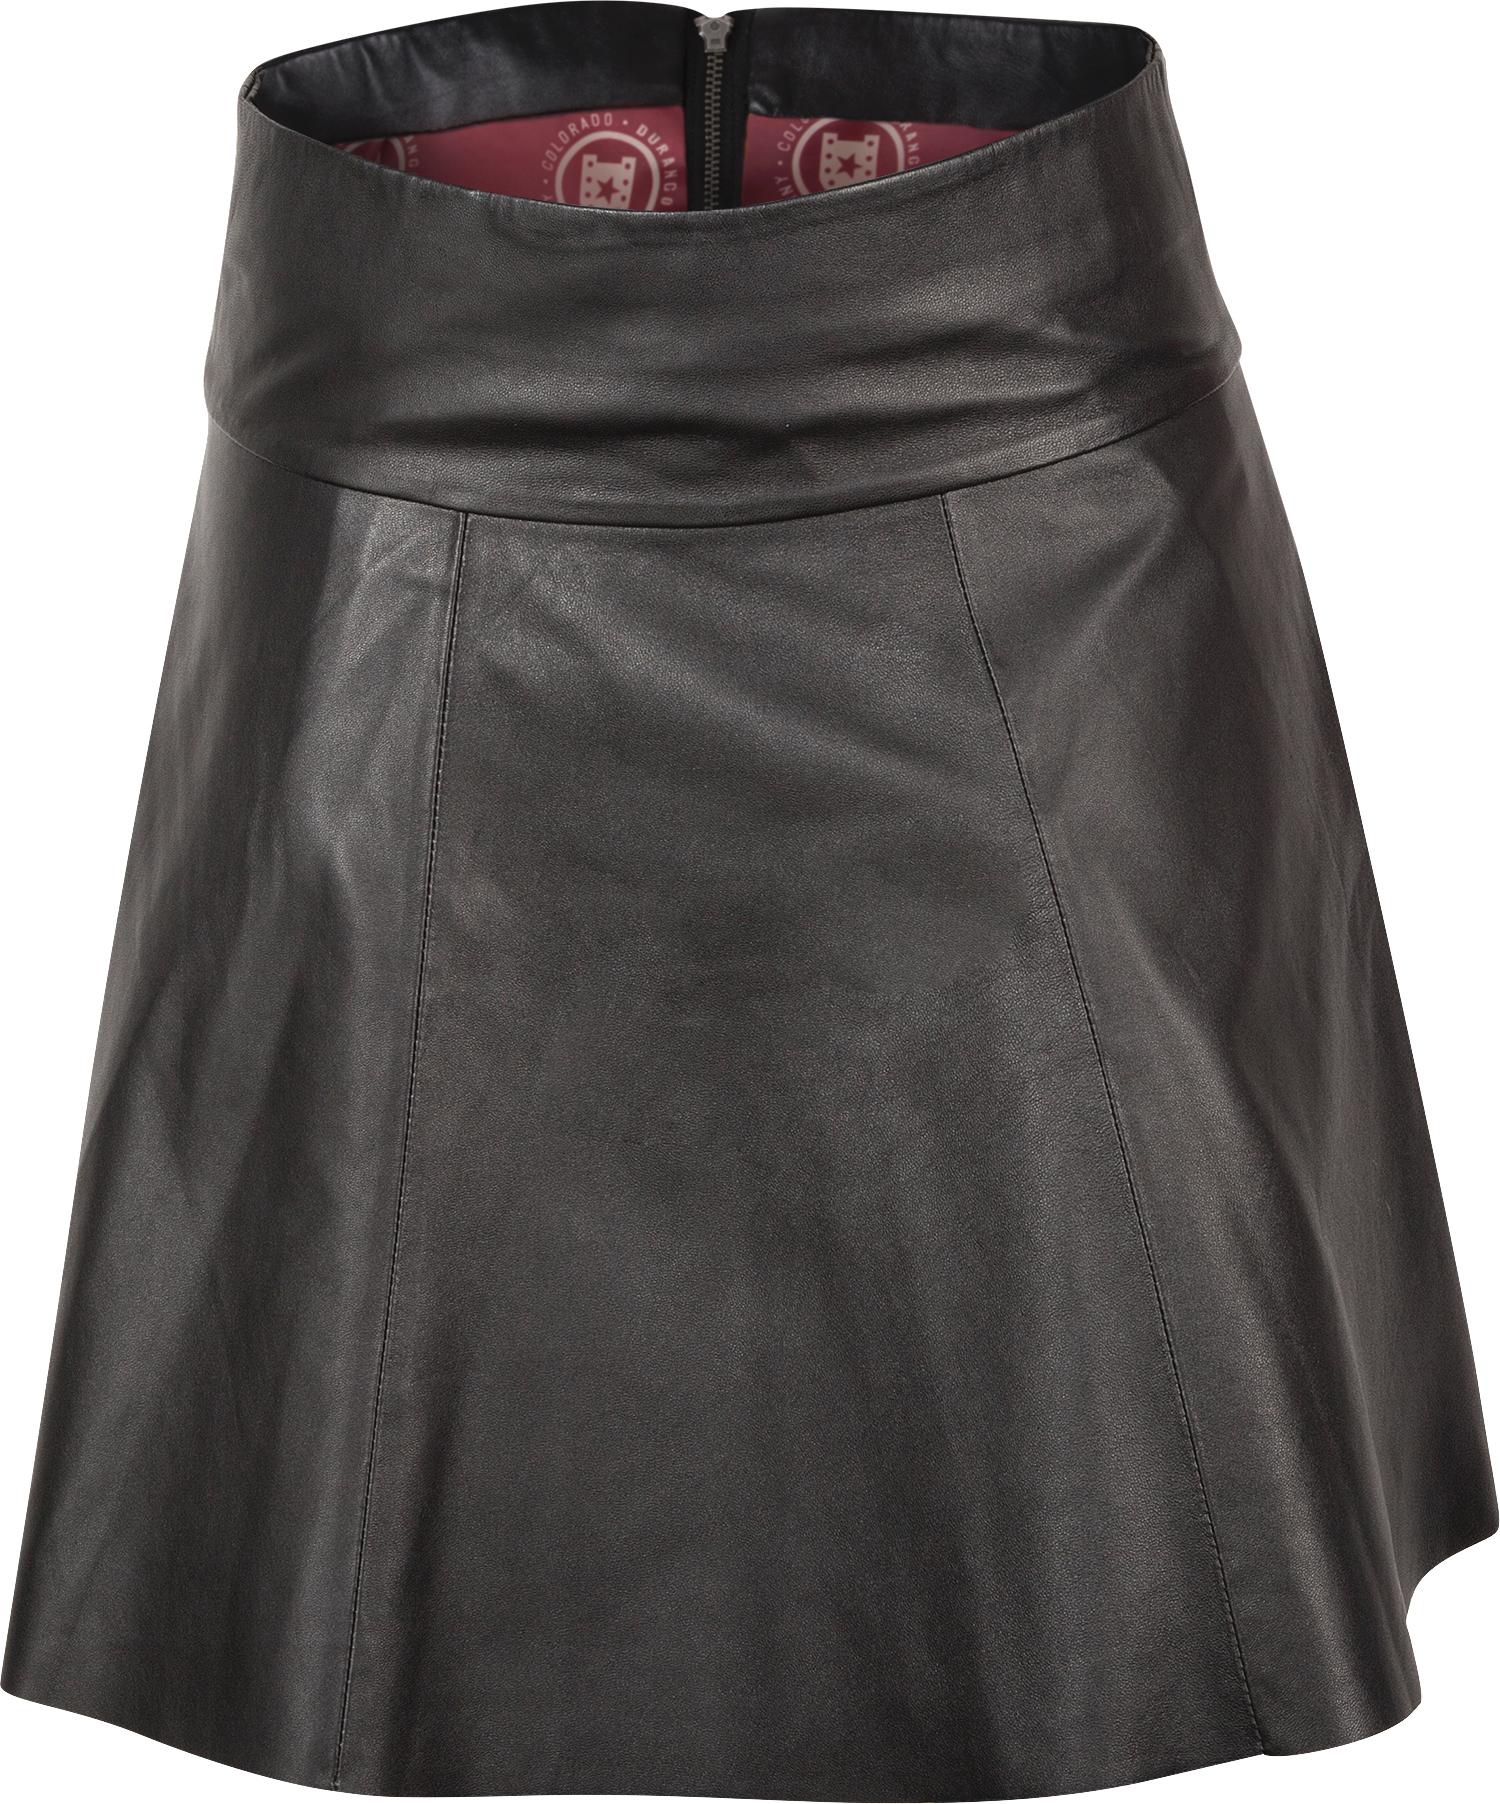 Durango Leather Company: Women's Tottie Leather Flare Skirt